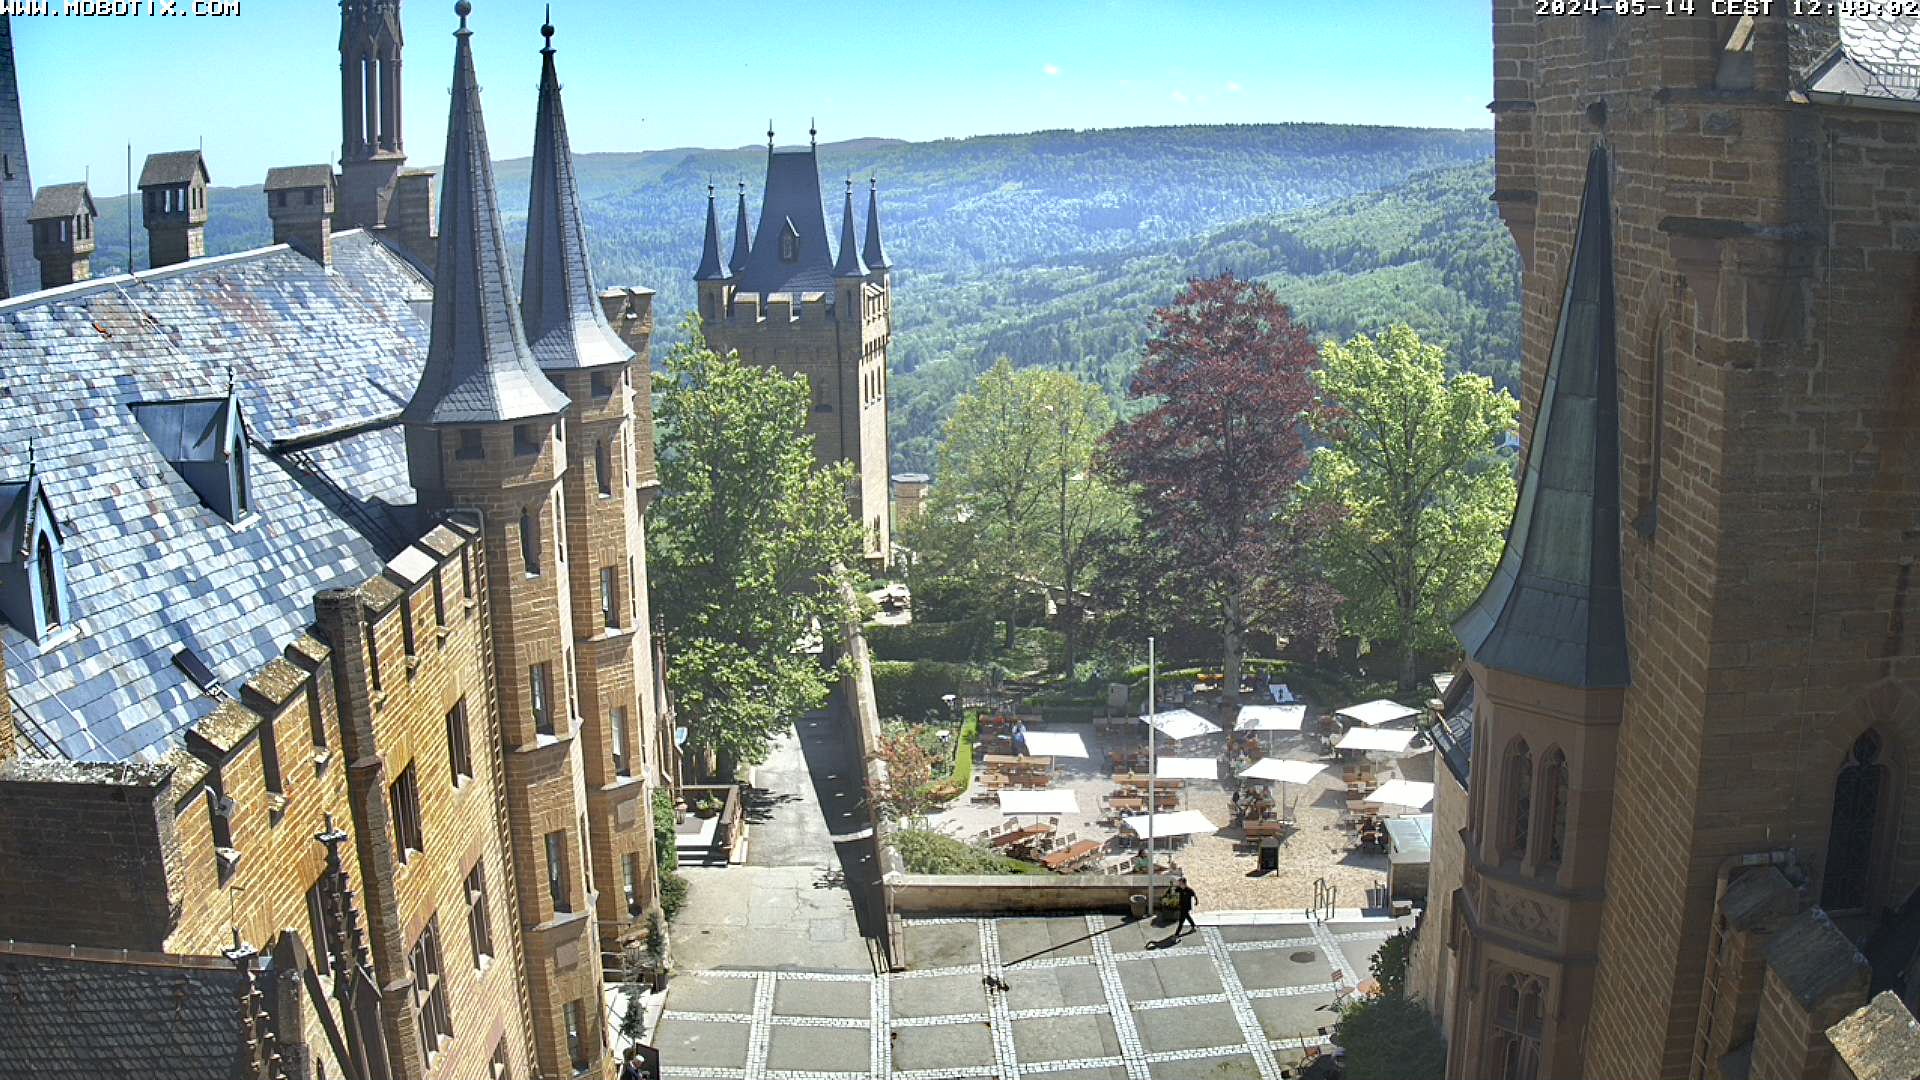 Burg Hohenzollern Thu. 12:50